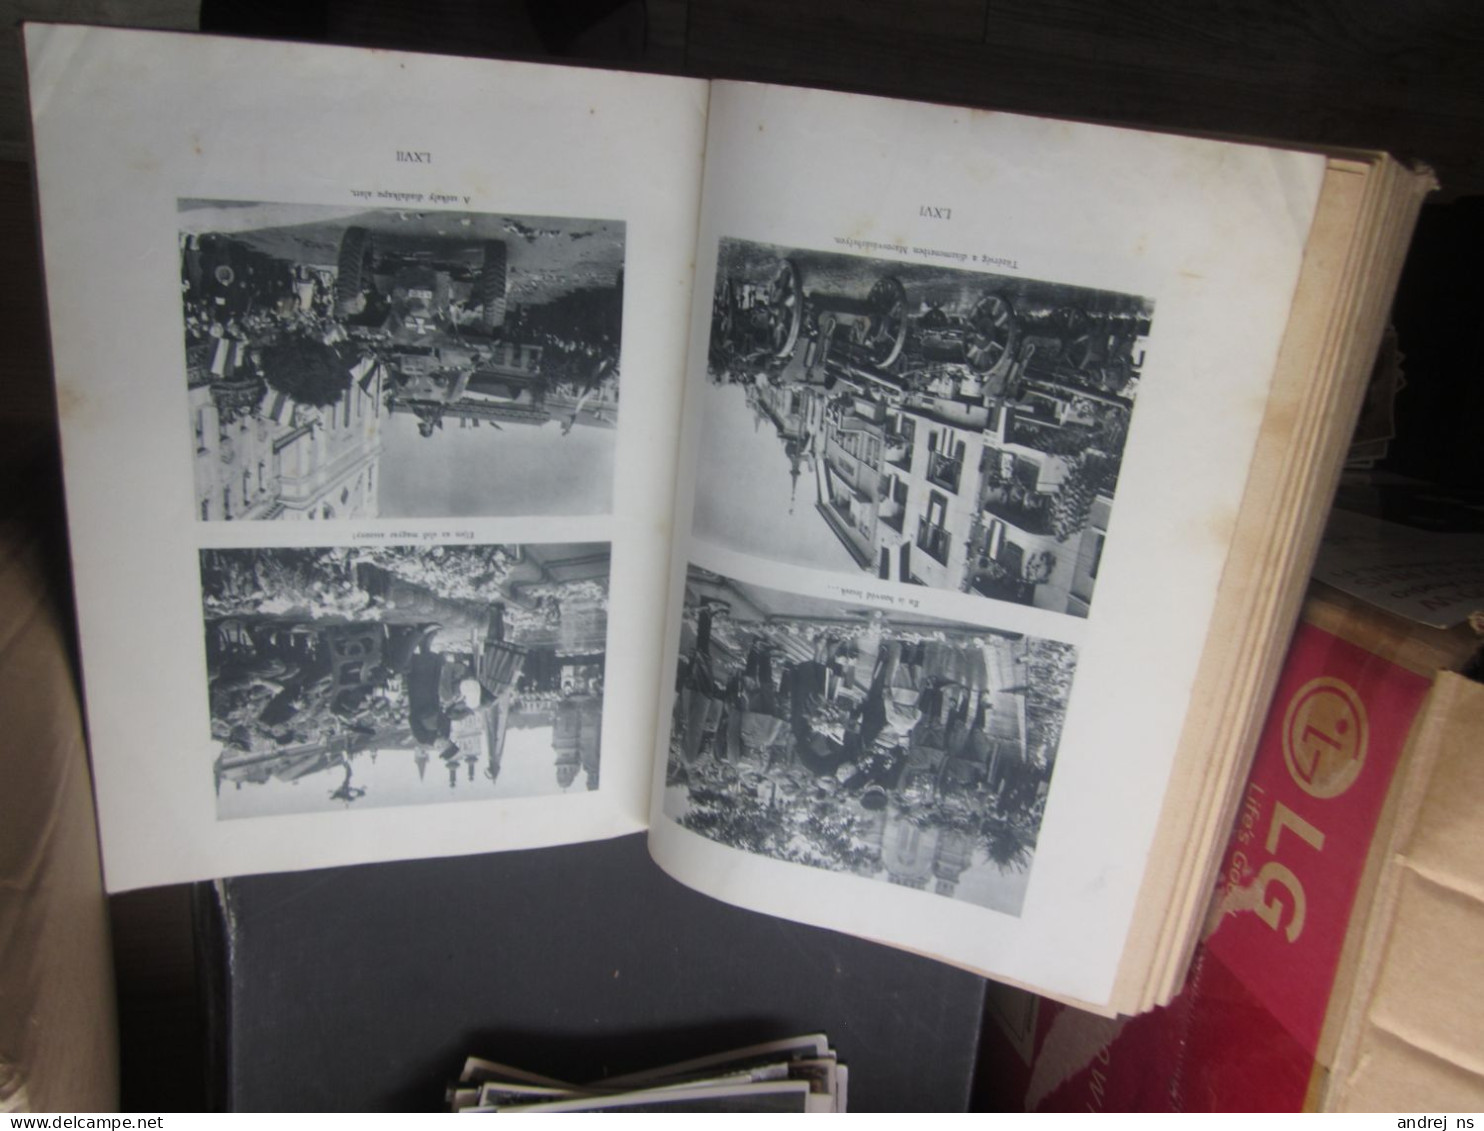 erdelyunk es  Honvedsegunk tortenelmi esemenysorozat kepekkel Budapest 1941 WW2 224 pages big book